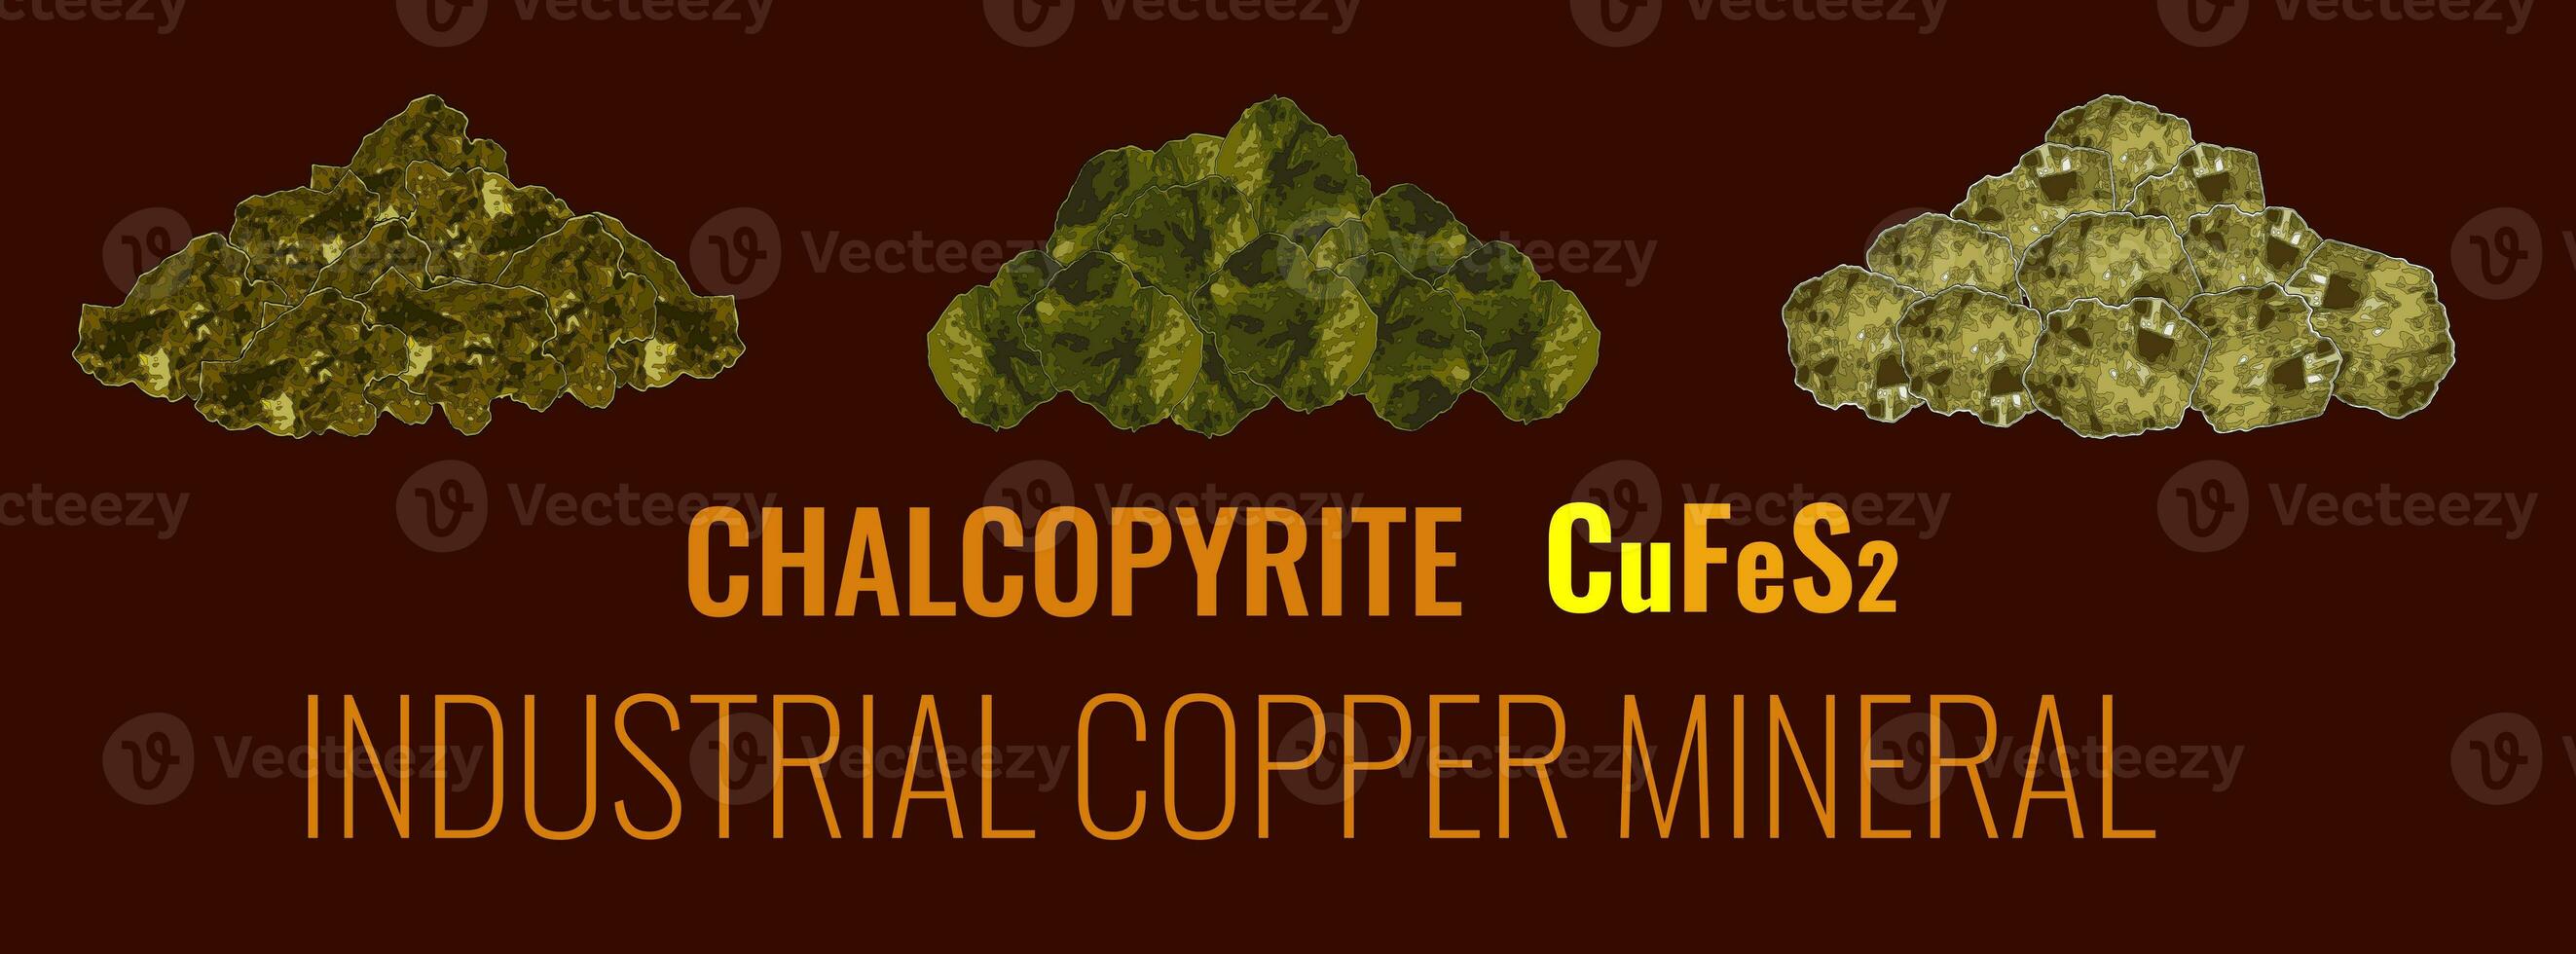 Chalcopyrite illustration set. INDUSTRIAL COPPER MINERALS. Strategic minerals. photo